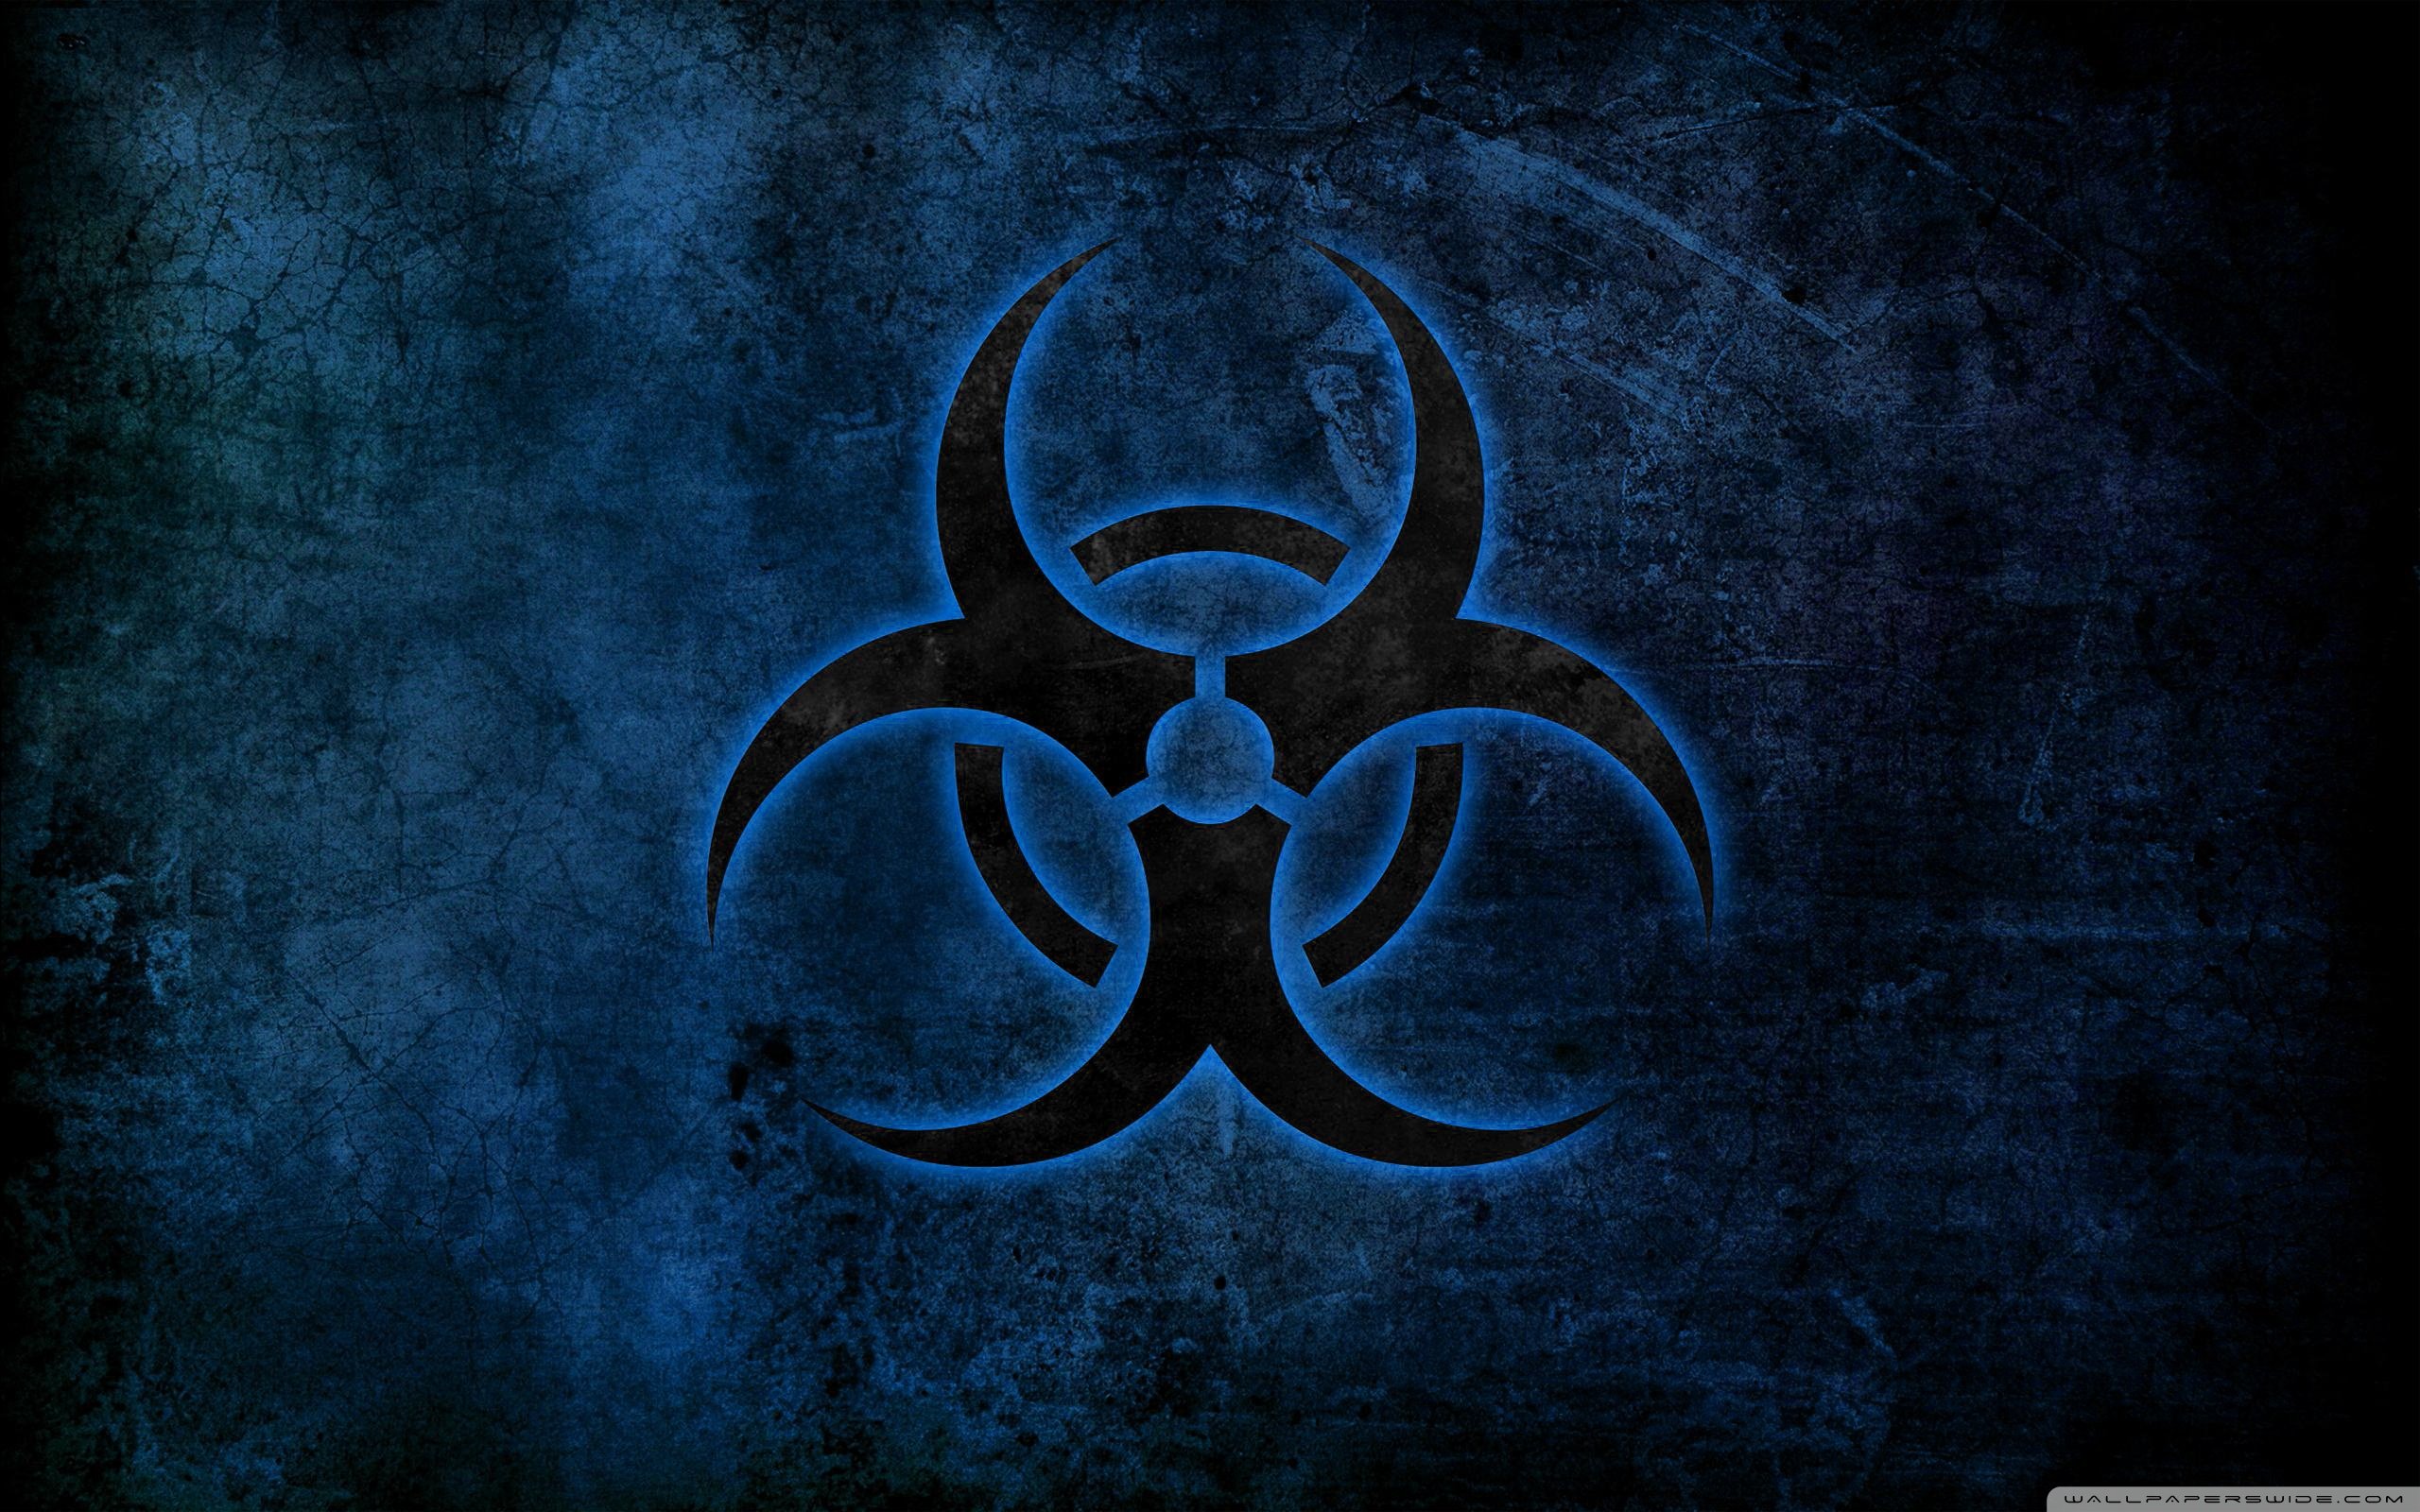 Biohazard Symbol Wallpaper